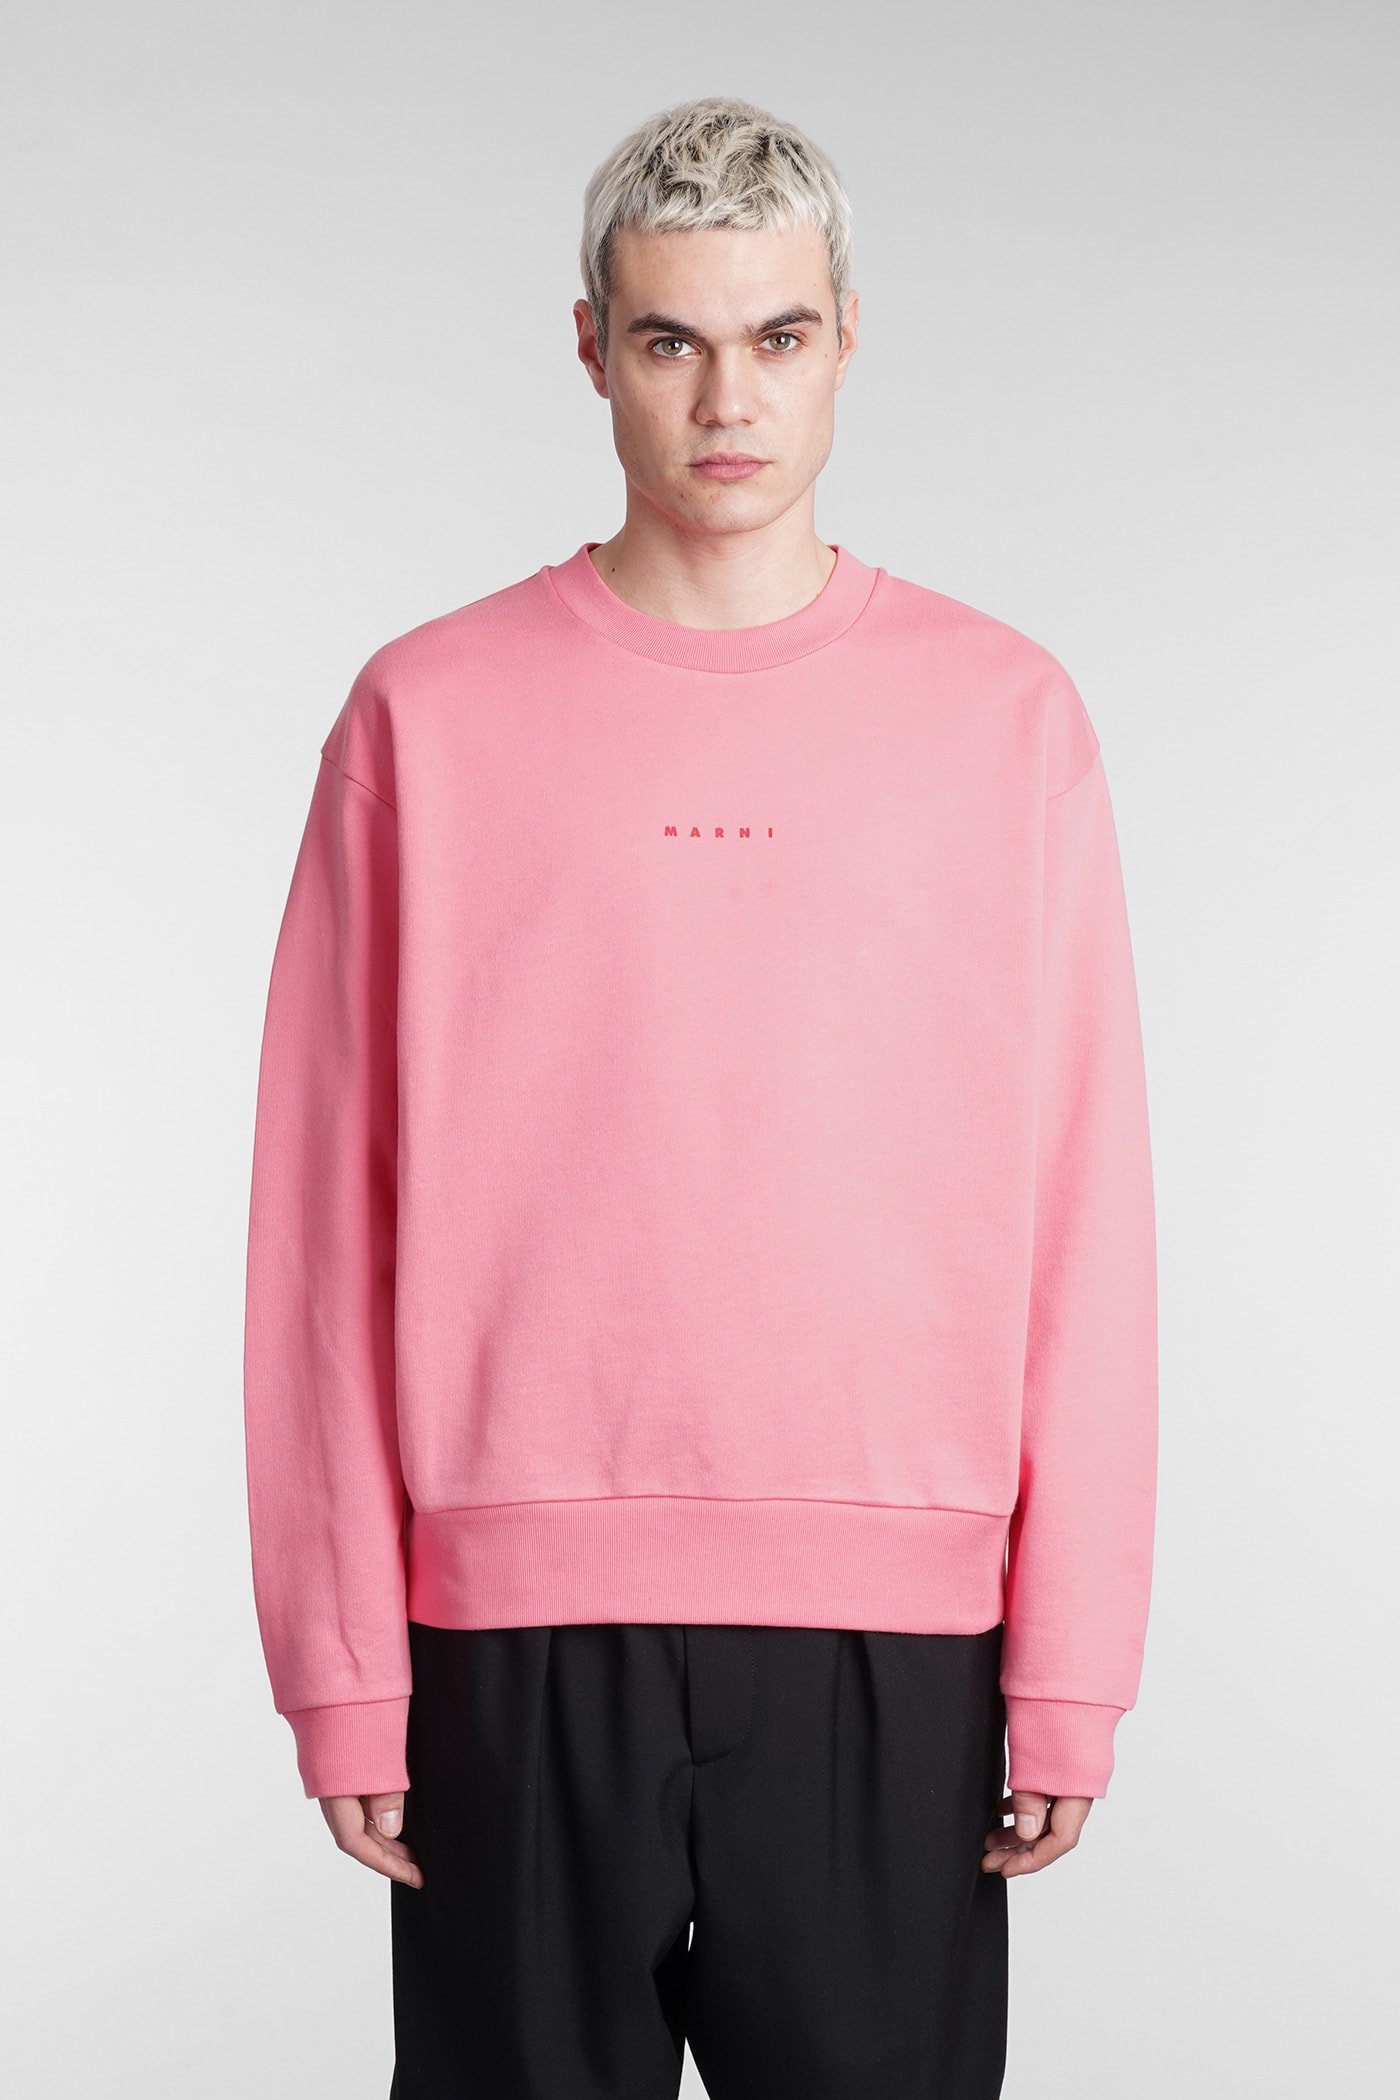 Marni Sweatshirt In Rose-pink Cotton